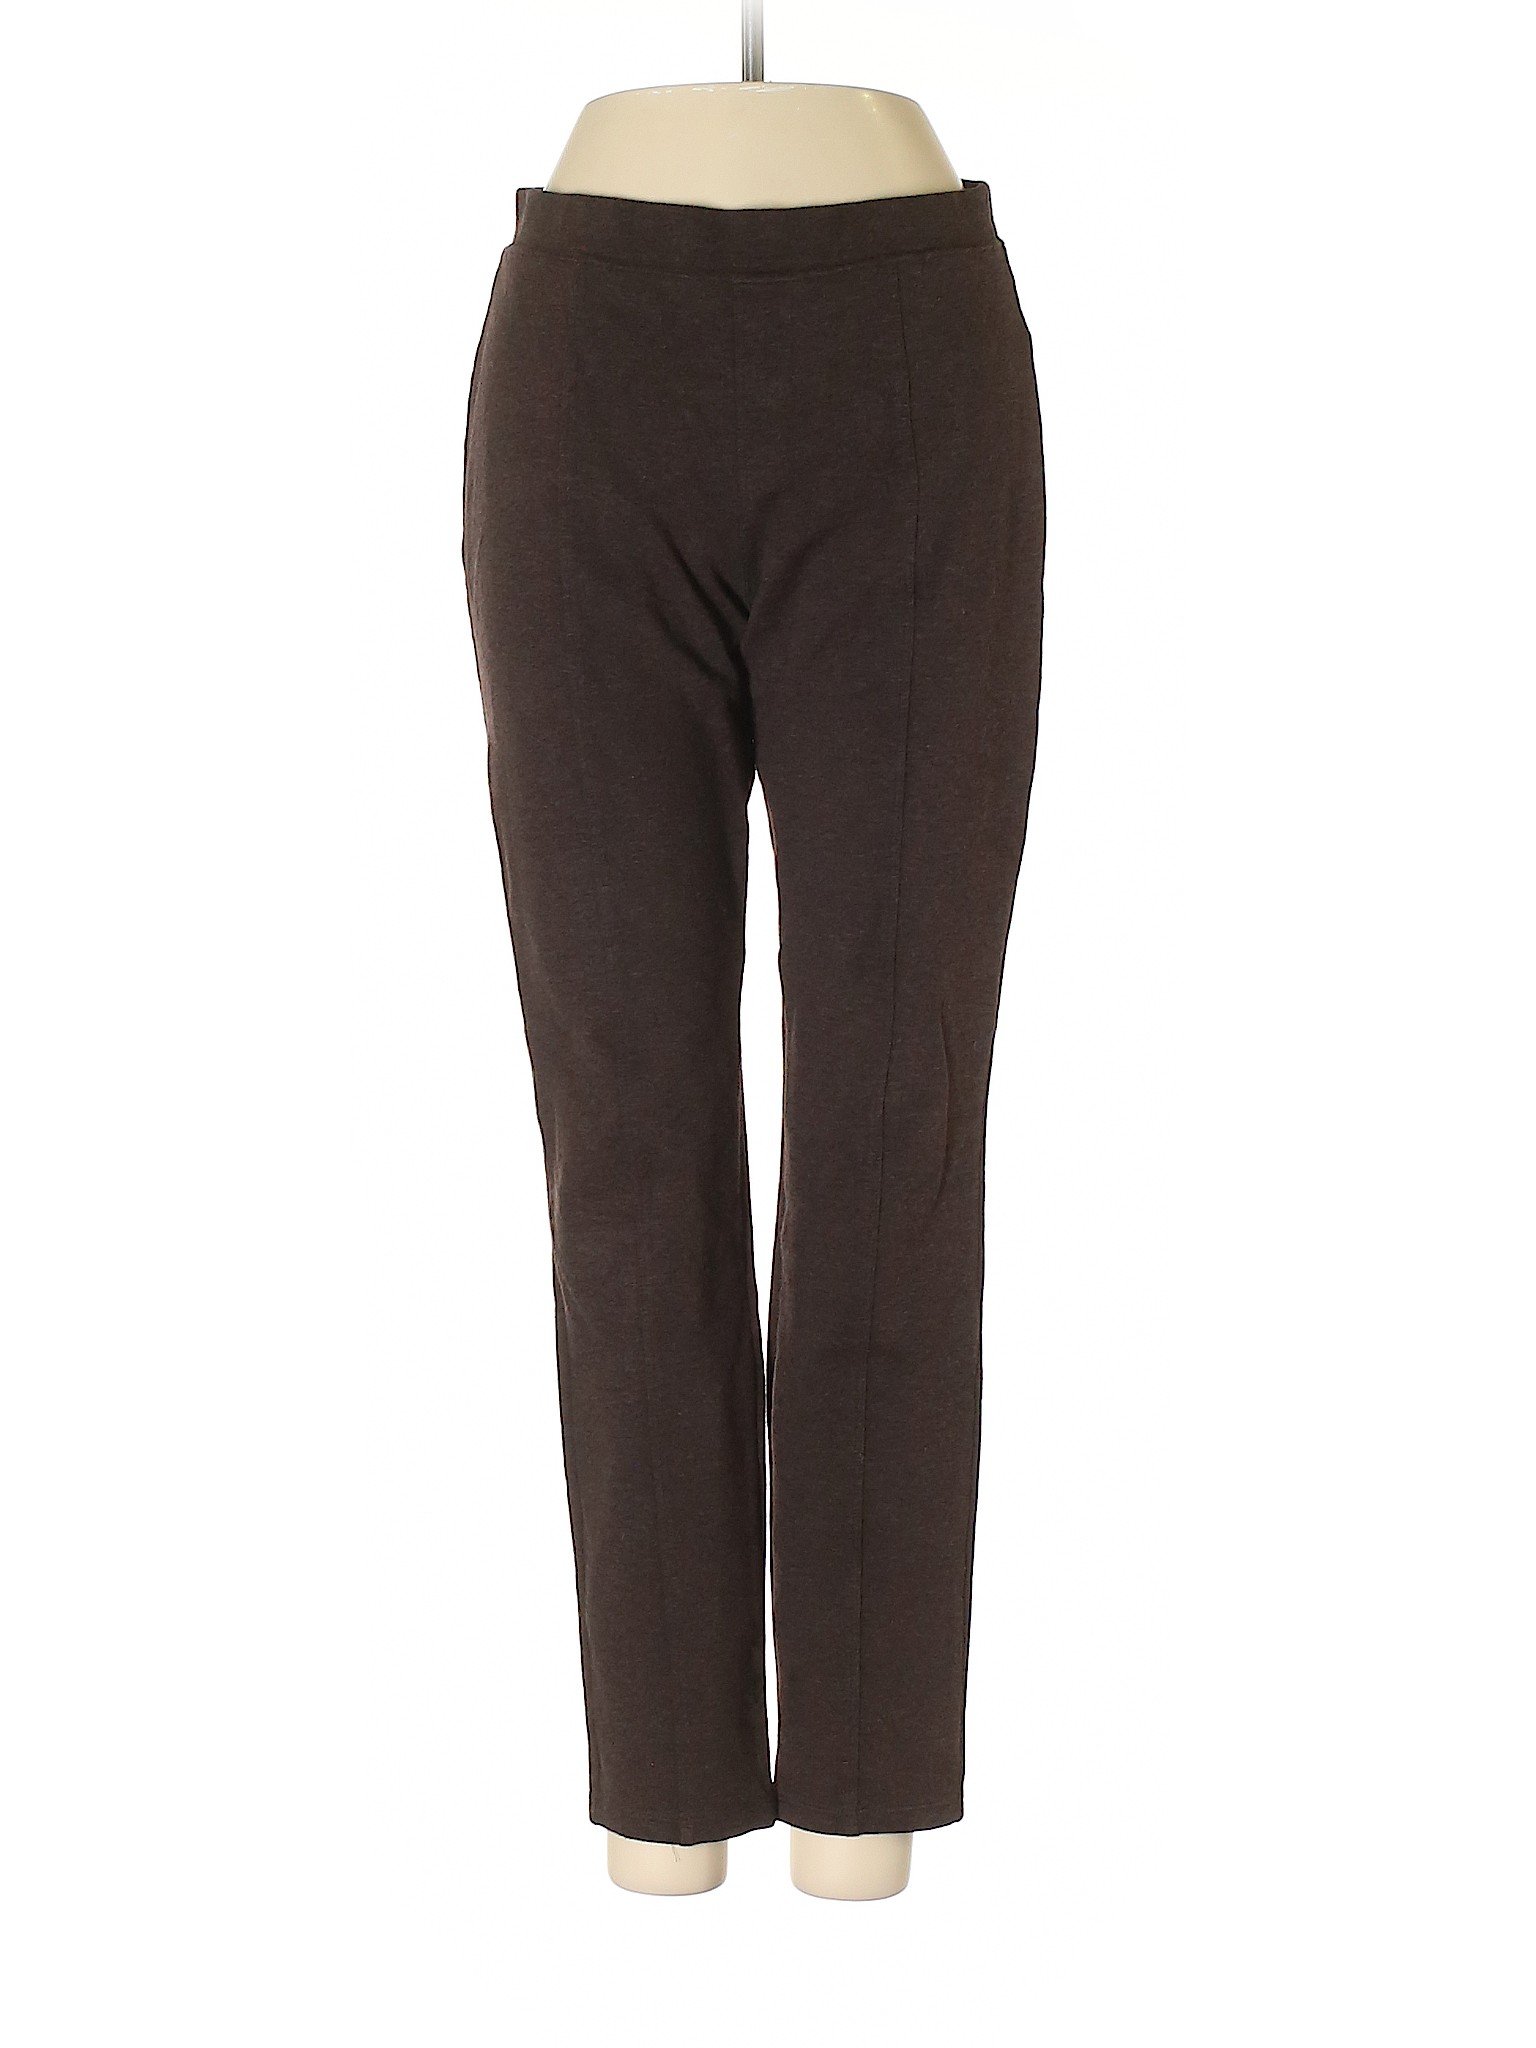 Uniqlo Women Brown Casual Pants S | eBay